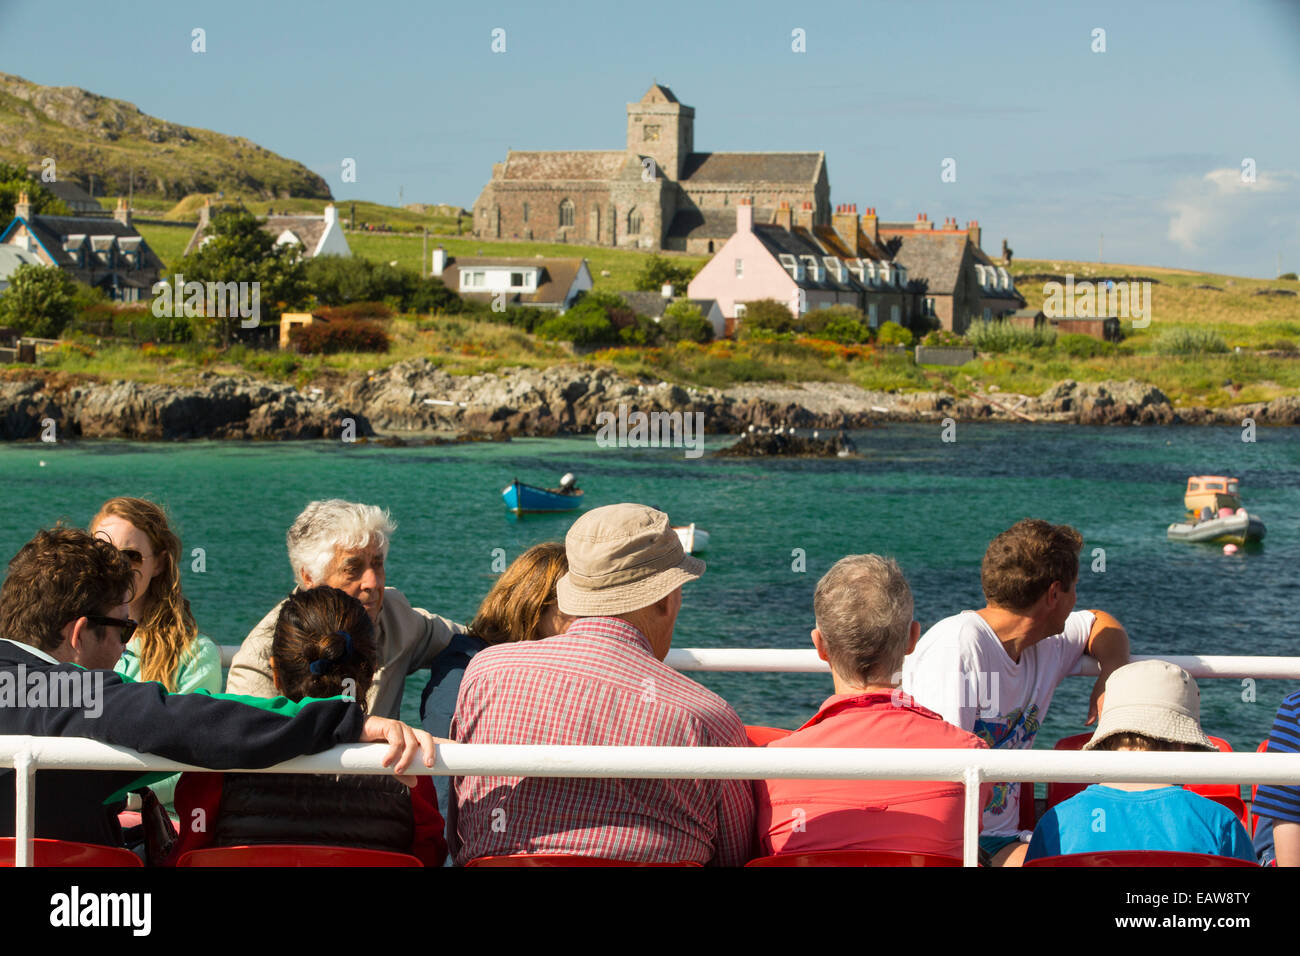 Iona Abbey with passengers on the Iona ferry, Scotland, UK. Stock Photo